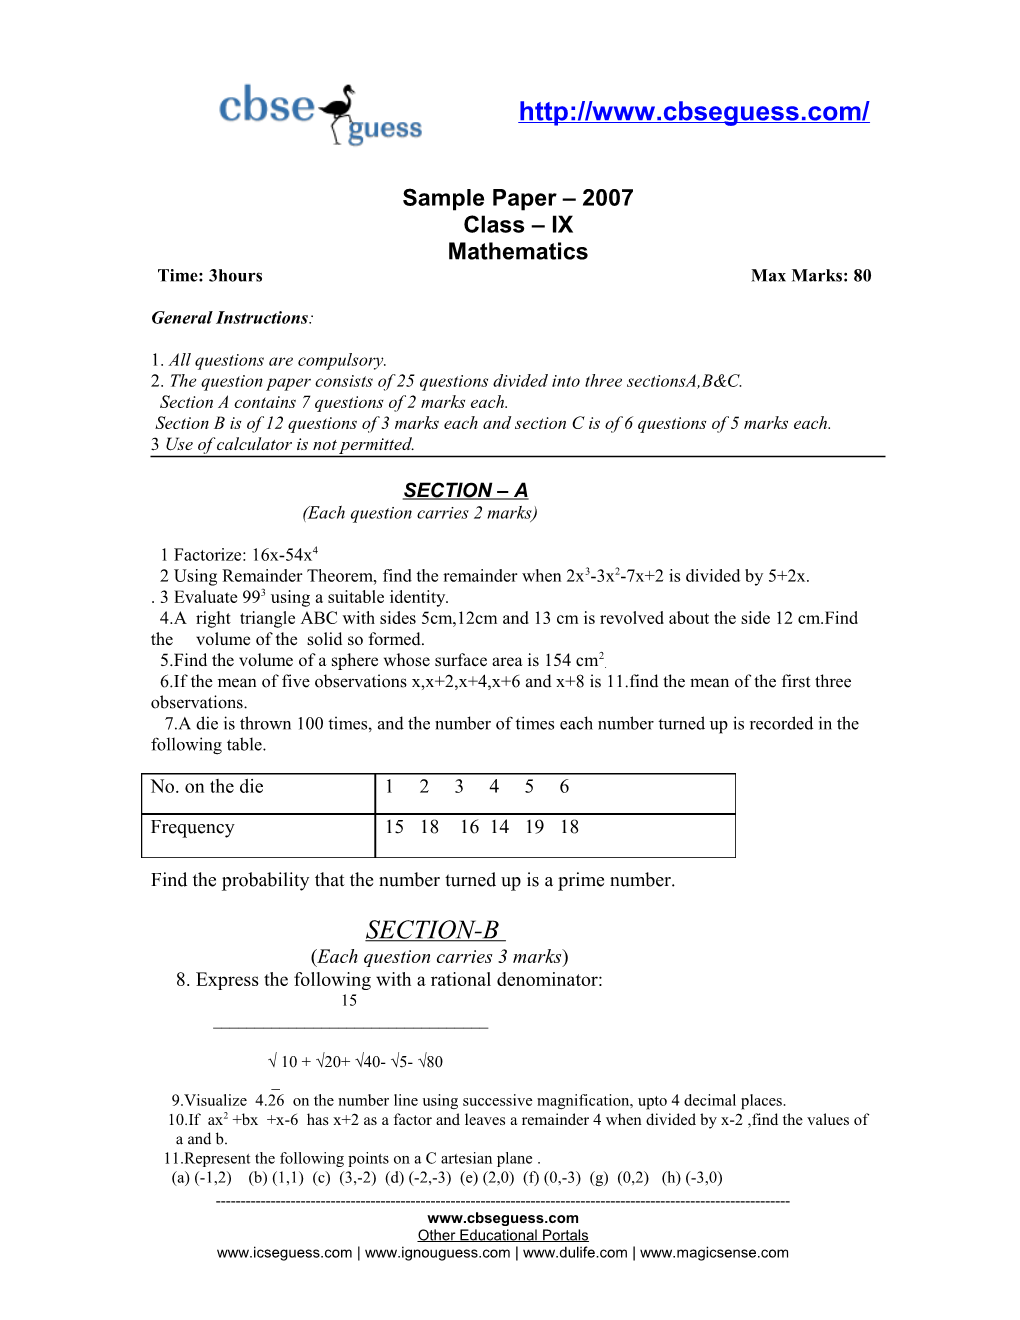 Model Test Paper 2006- 07 , Class IX